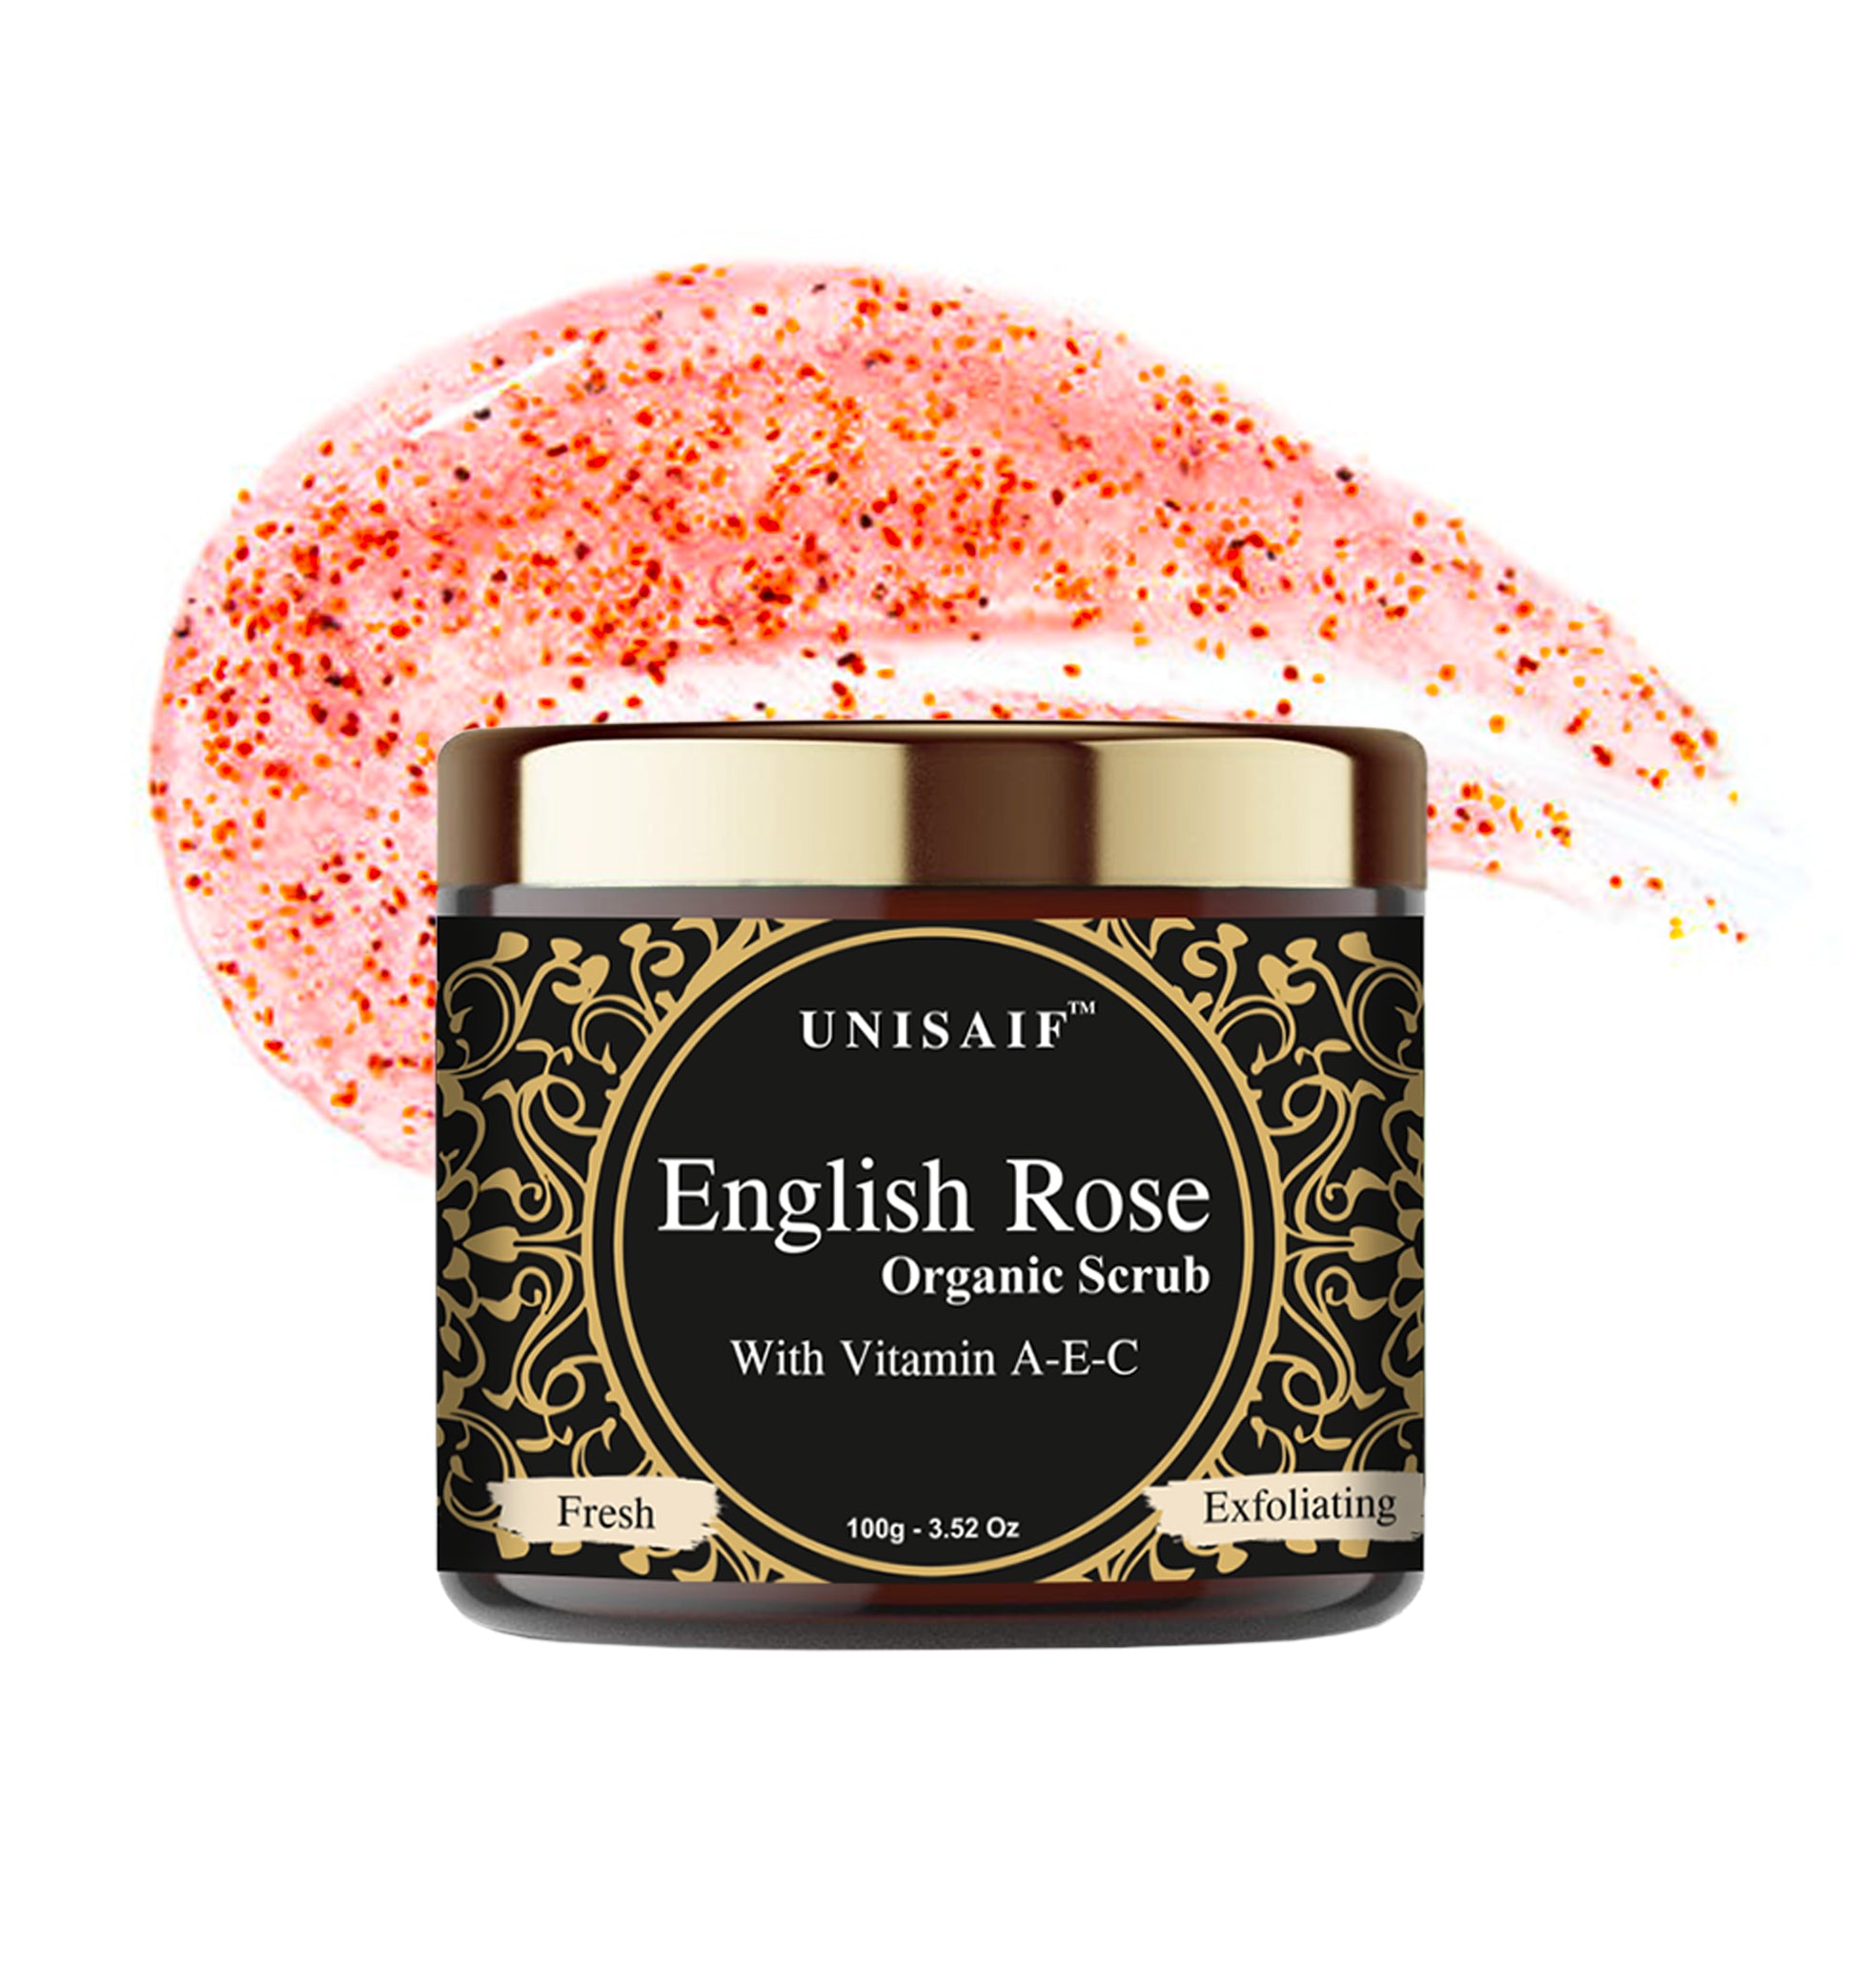 English Rose Organic Scrub (100g) With Vitamin A, E |Exfoliating| Hydrating| Freshness